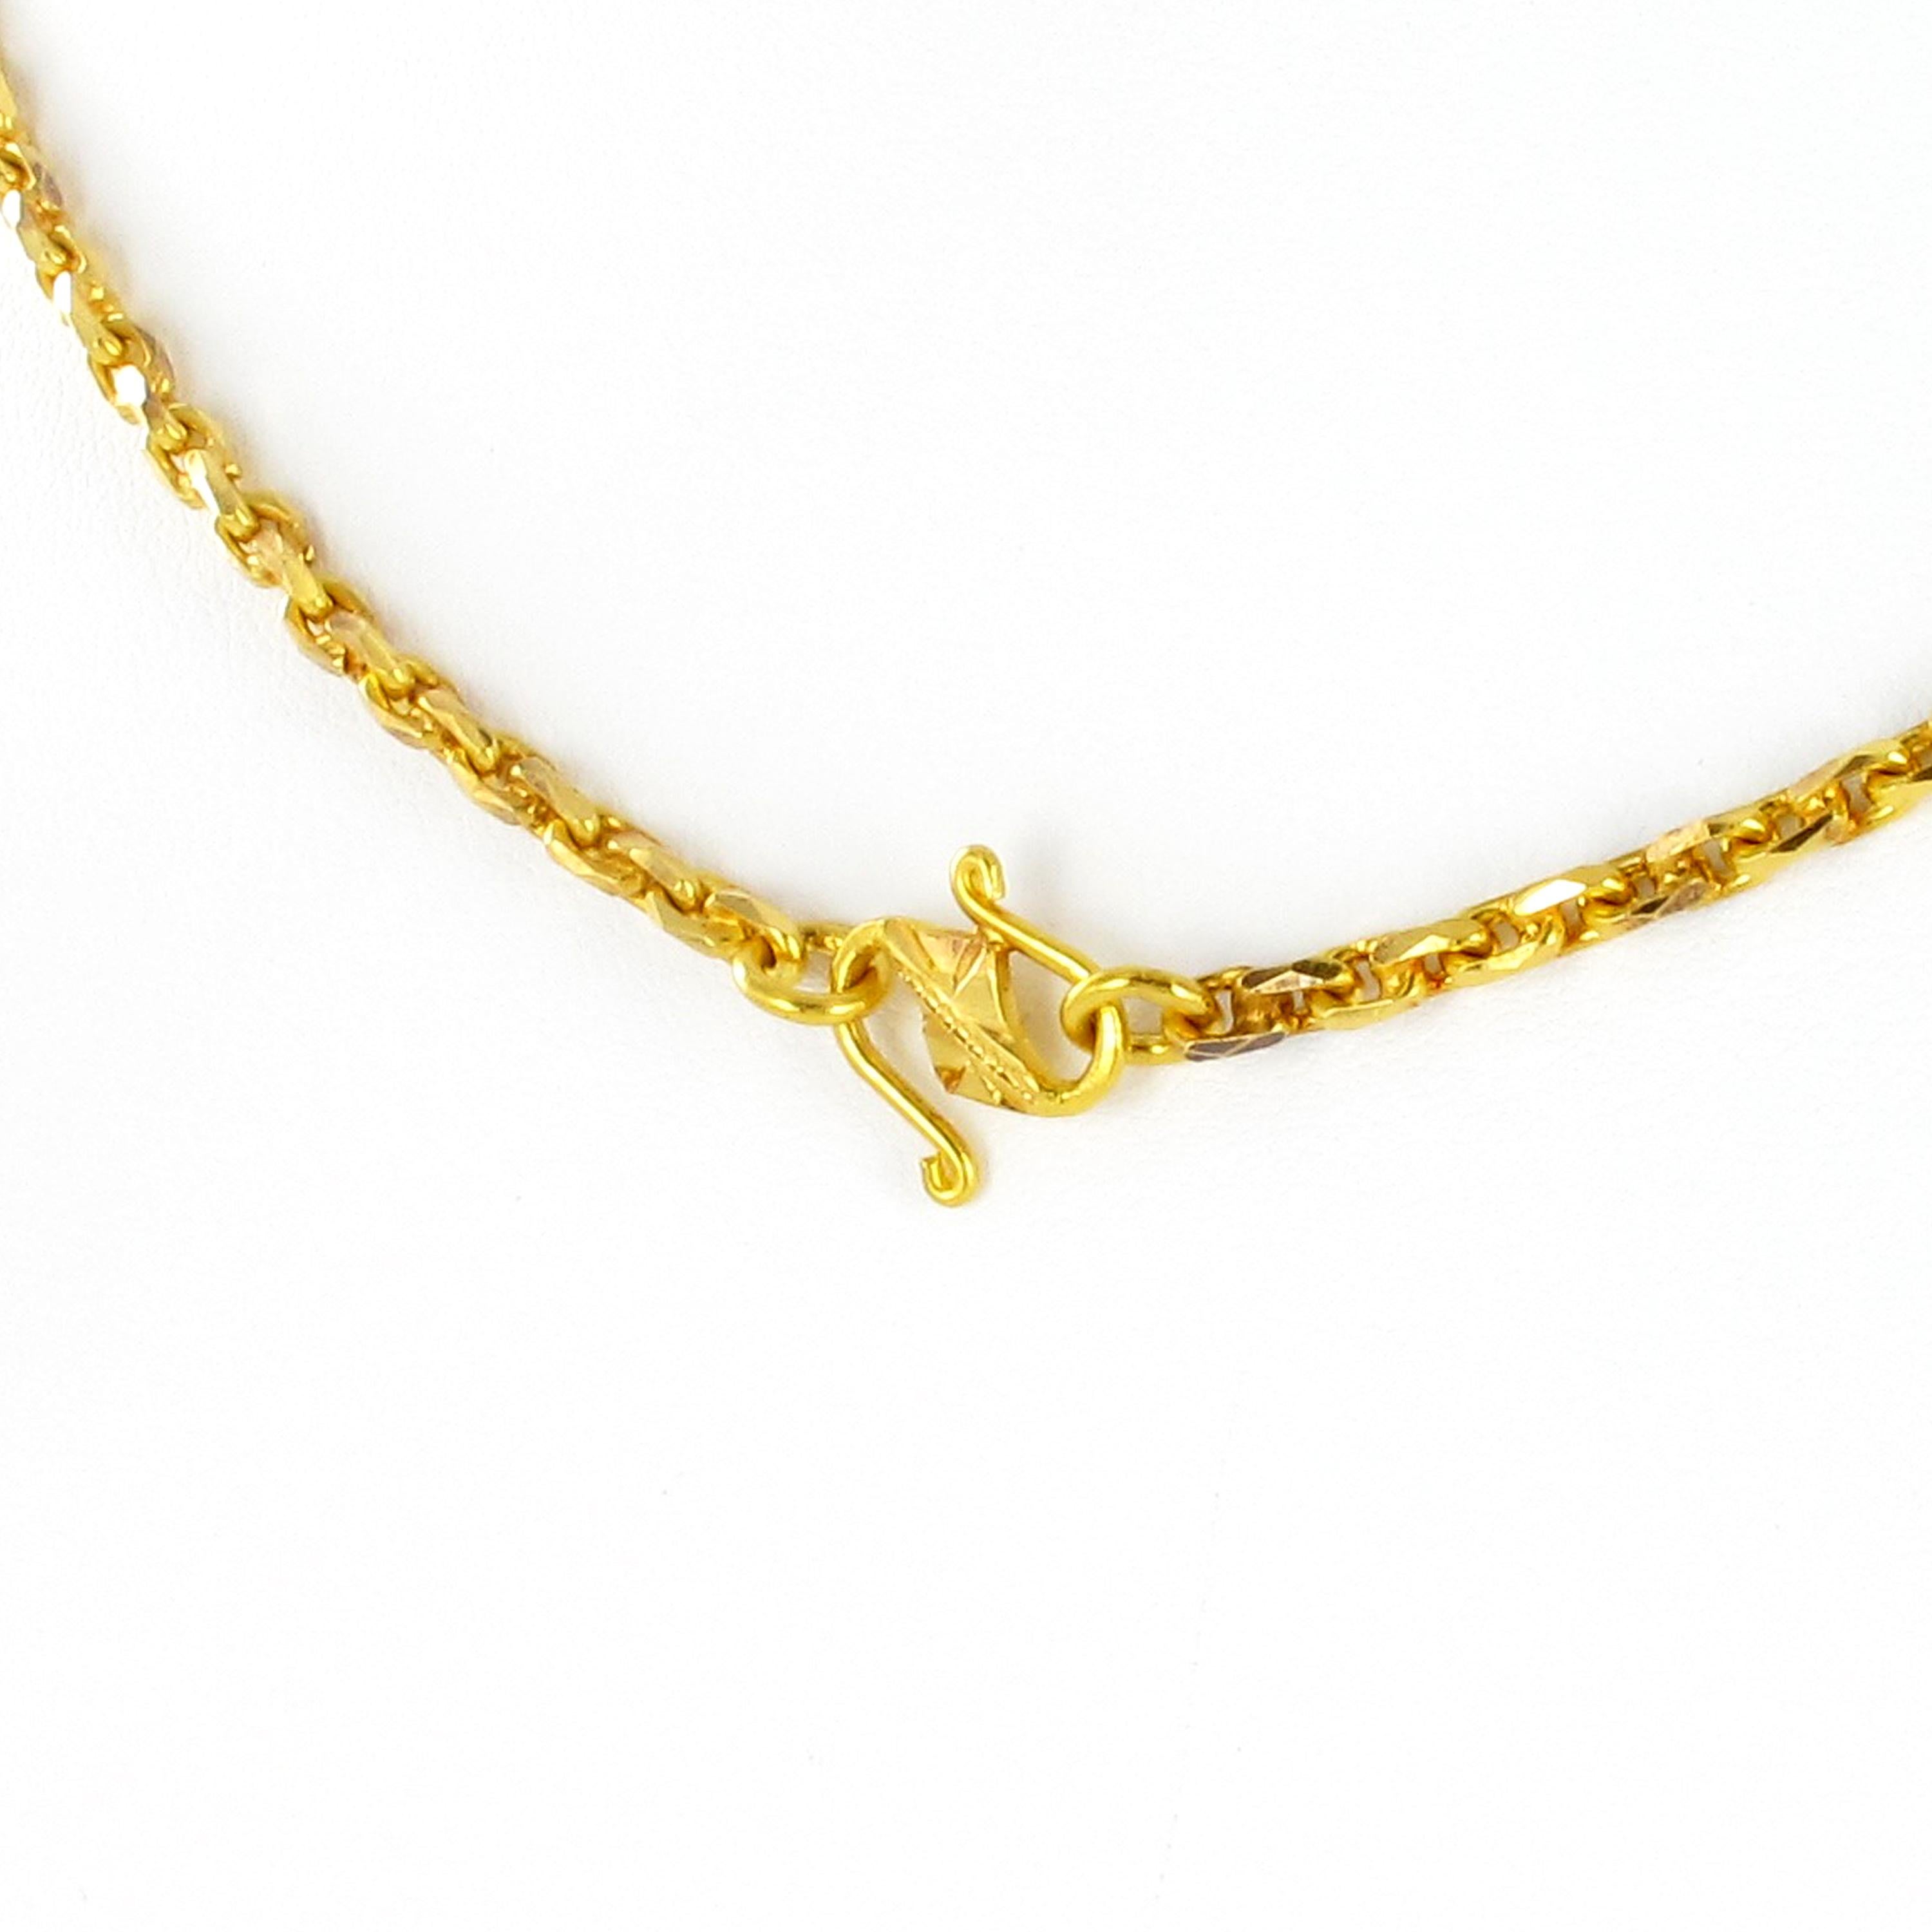 Massive Lemonquarz Pendant Necklace in Yellow Gold 750 For Sale 2